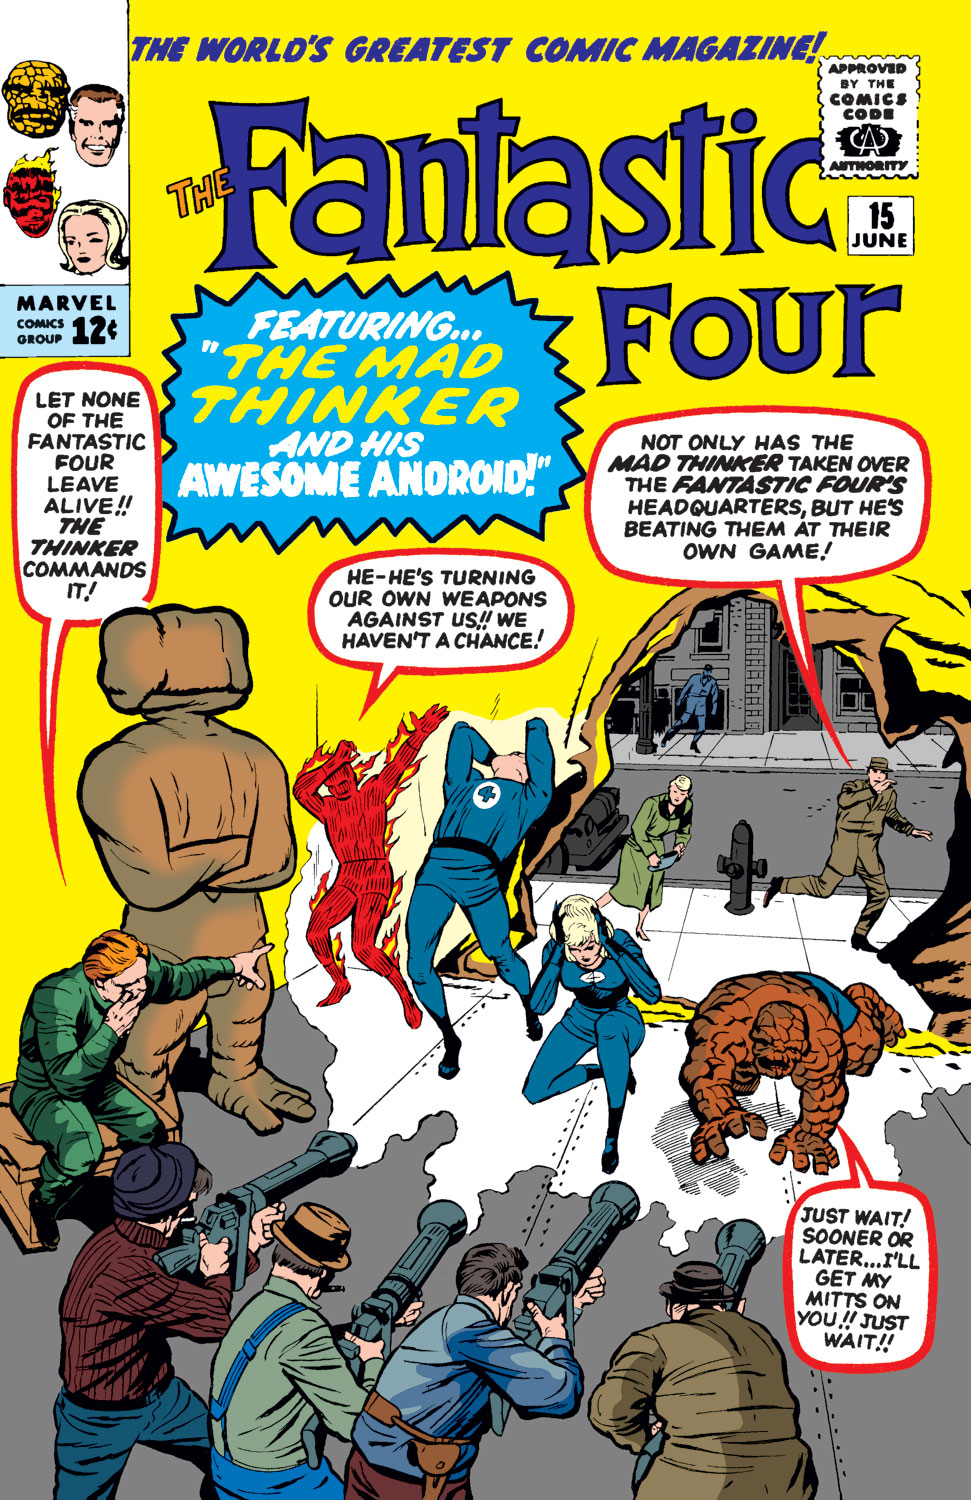 Fantastic Four (1961) #15